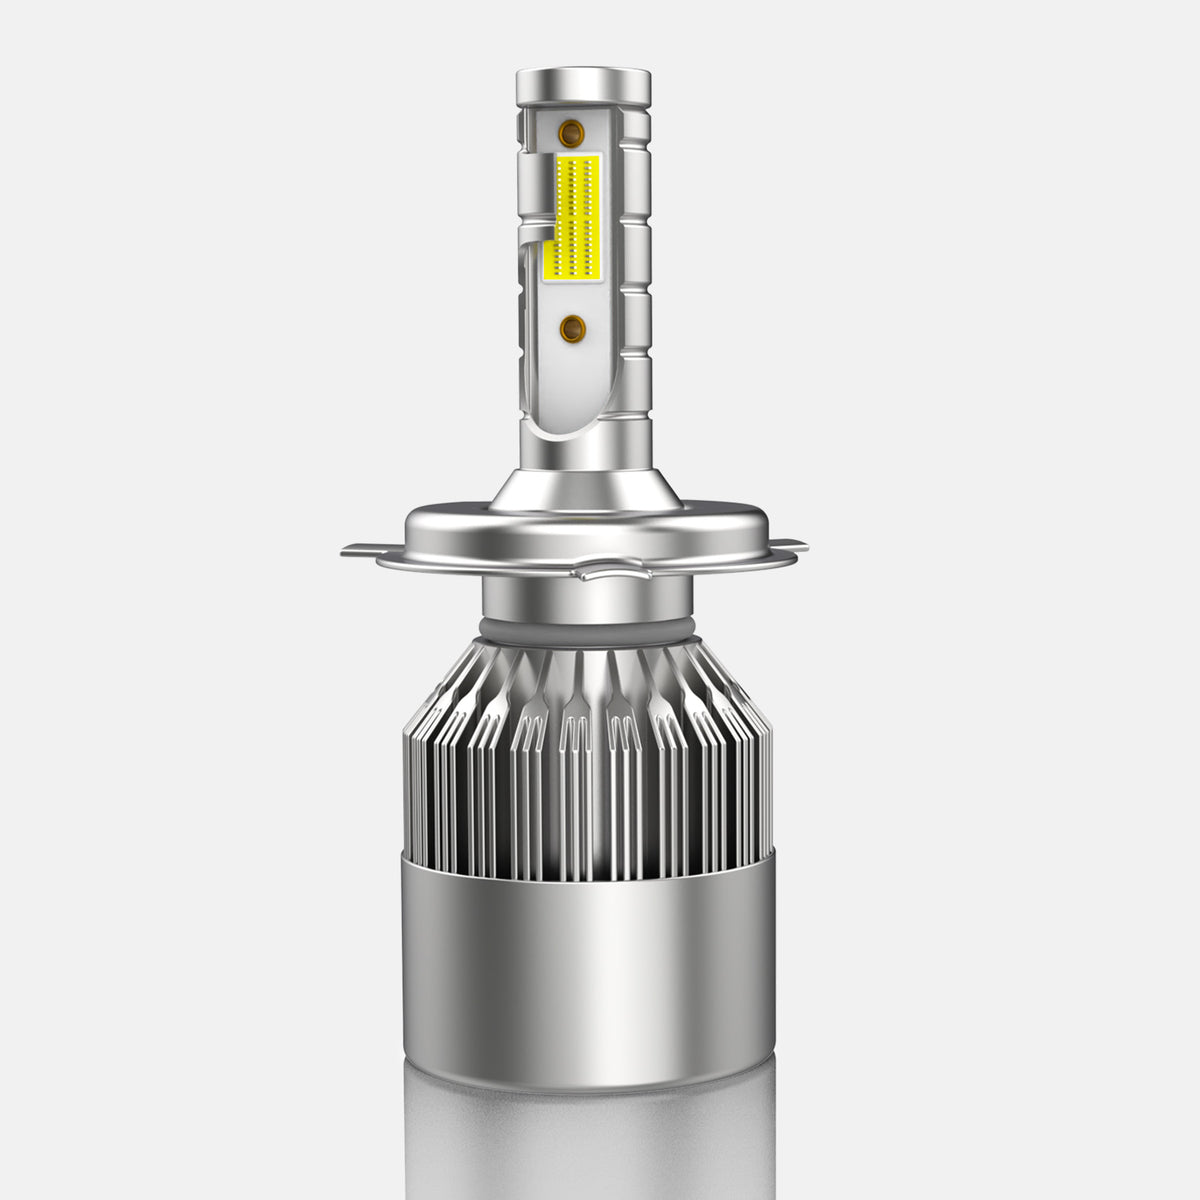 c6 led headlight bulbs H4, 9003, HB2 LED bulbs automotive headlight led chips halogen replacement